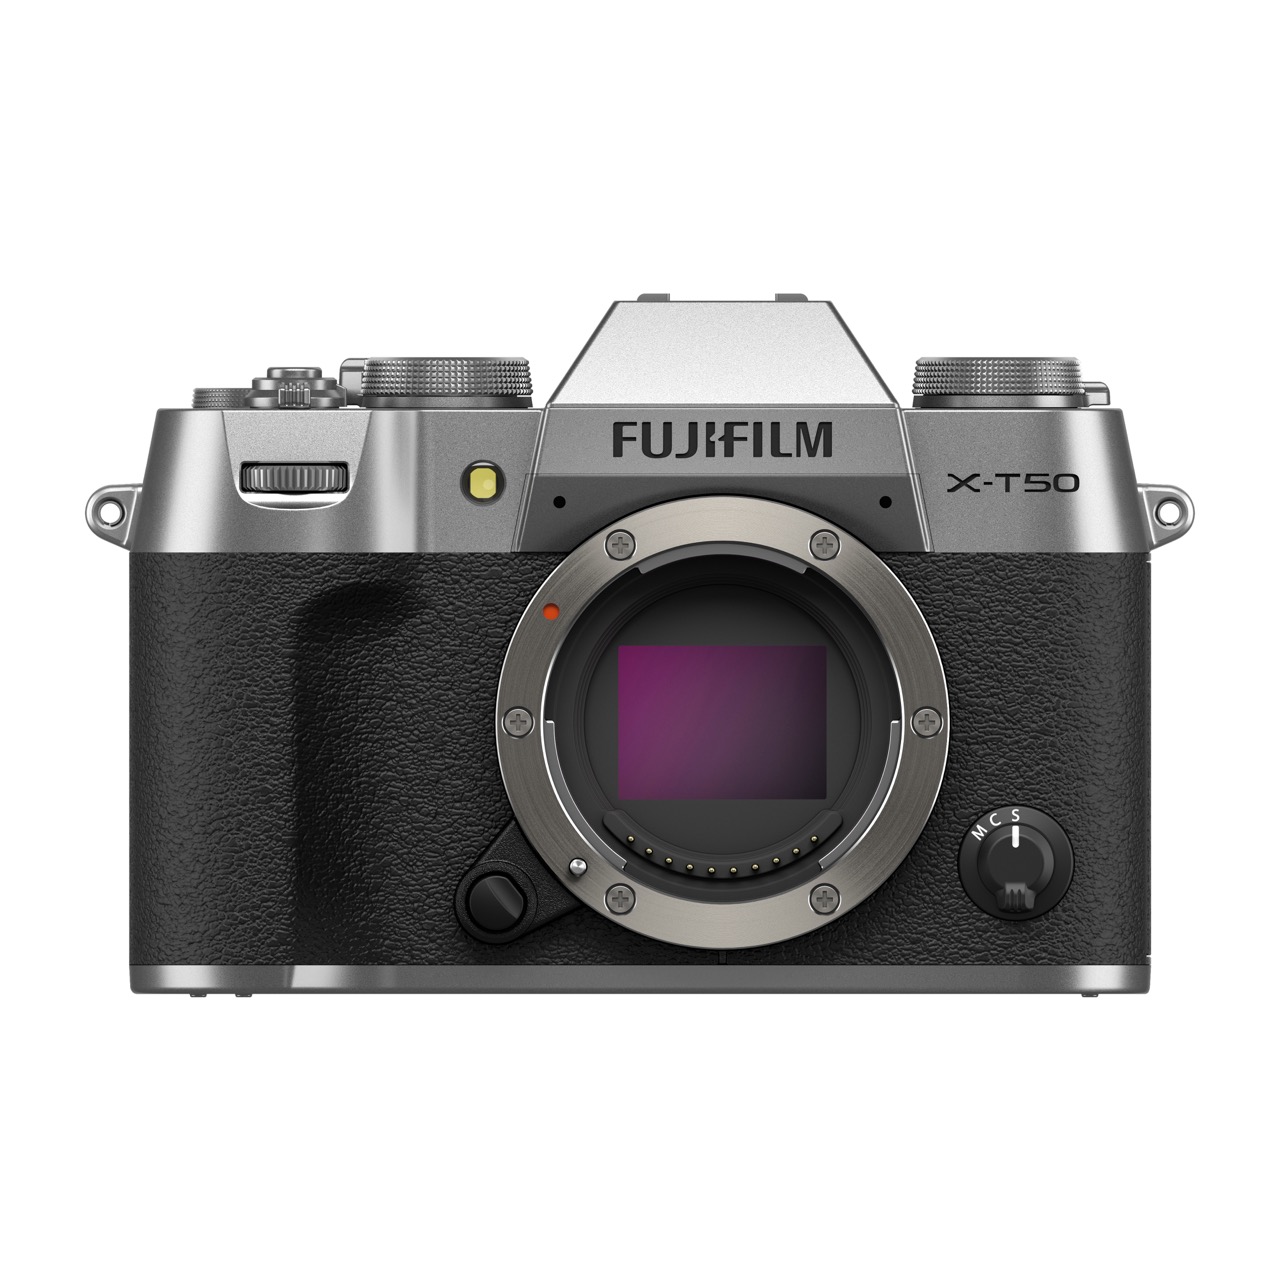 Fujifilm X-T50 Kamera in Silber miit dem Sensor sichtbar